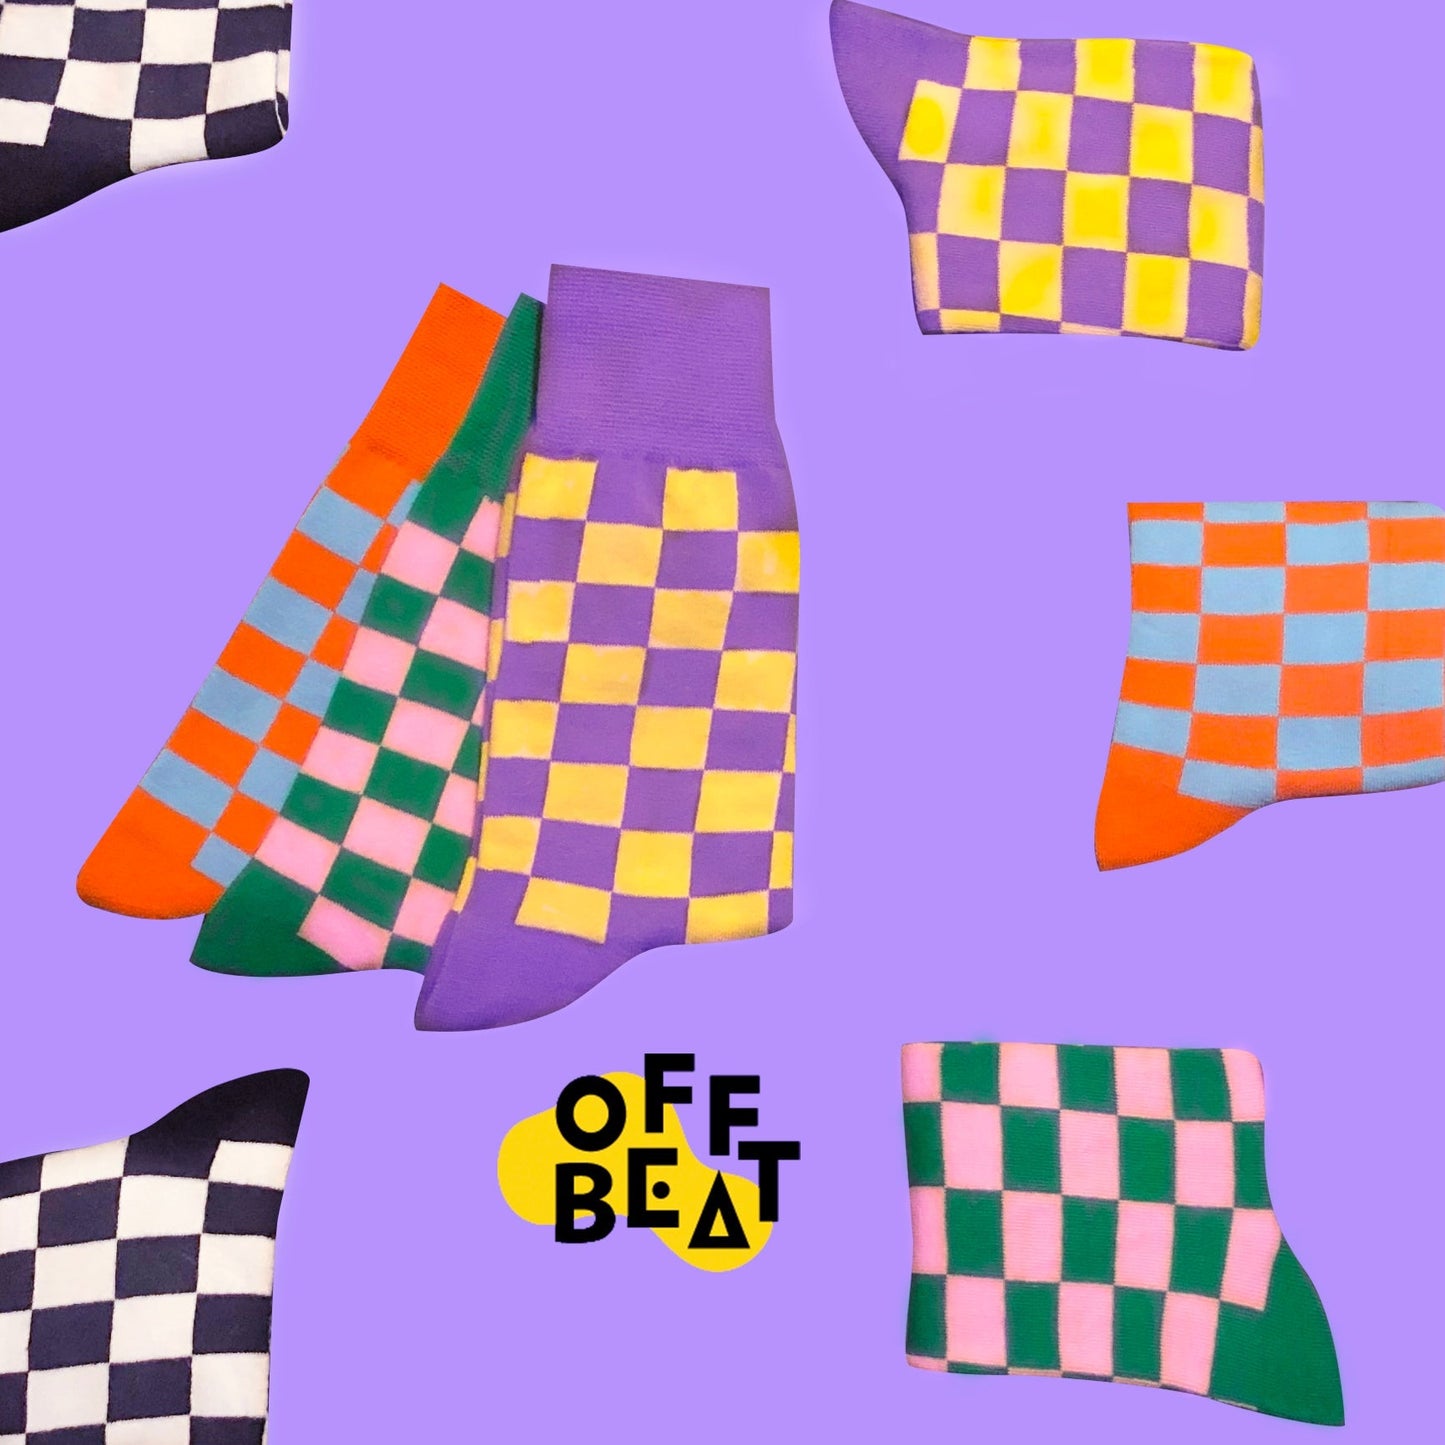 Socks purple yellow chessboard